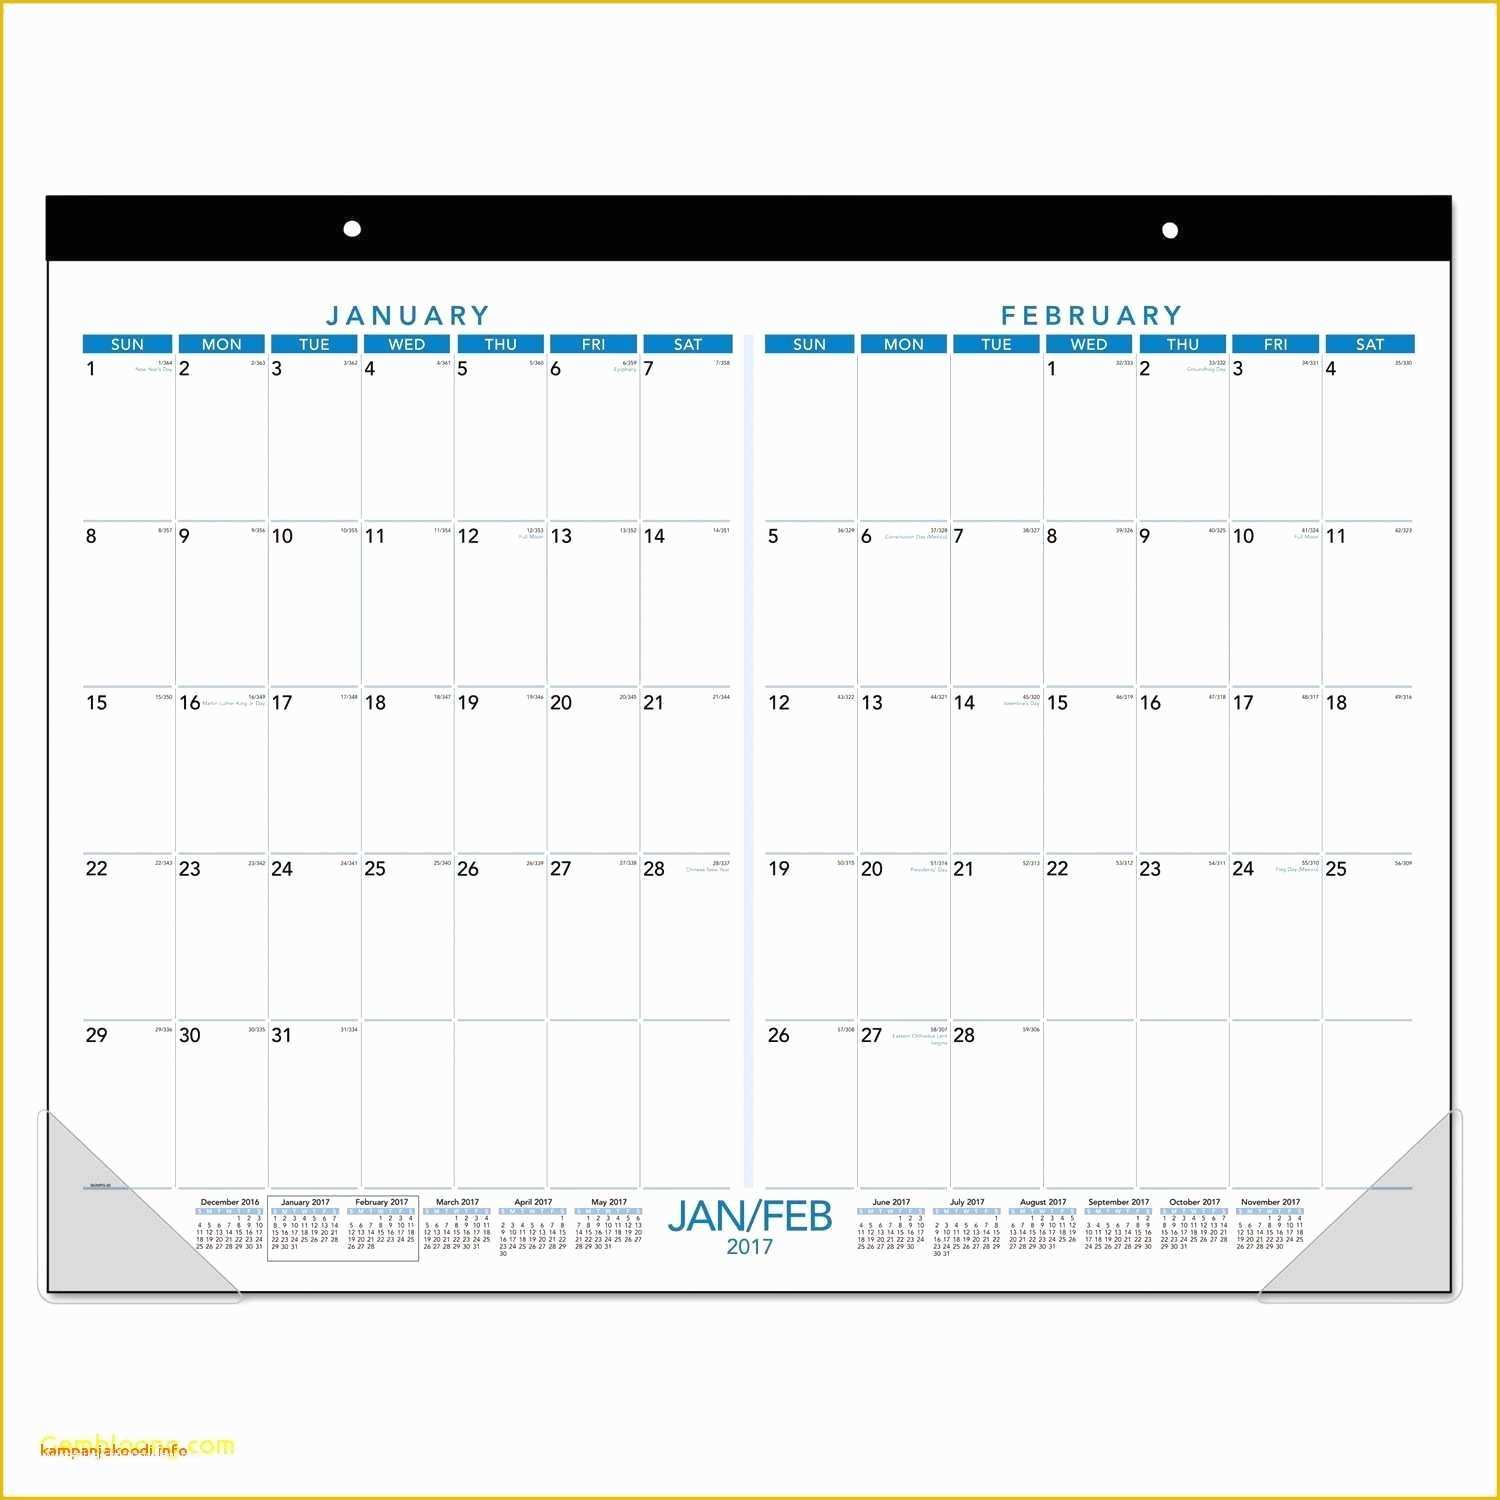 Free Indesign Calendar Template Of Details associated with 2019 Calendar Template Indesign